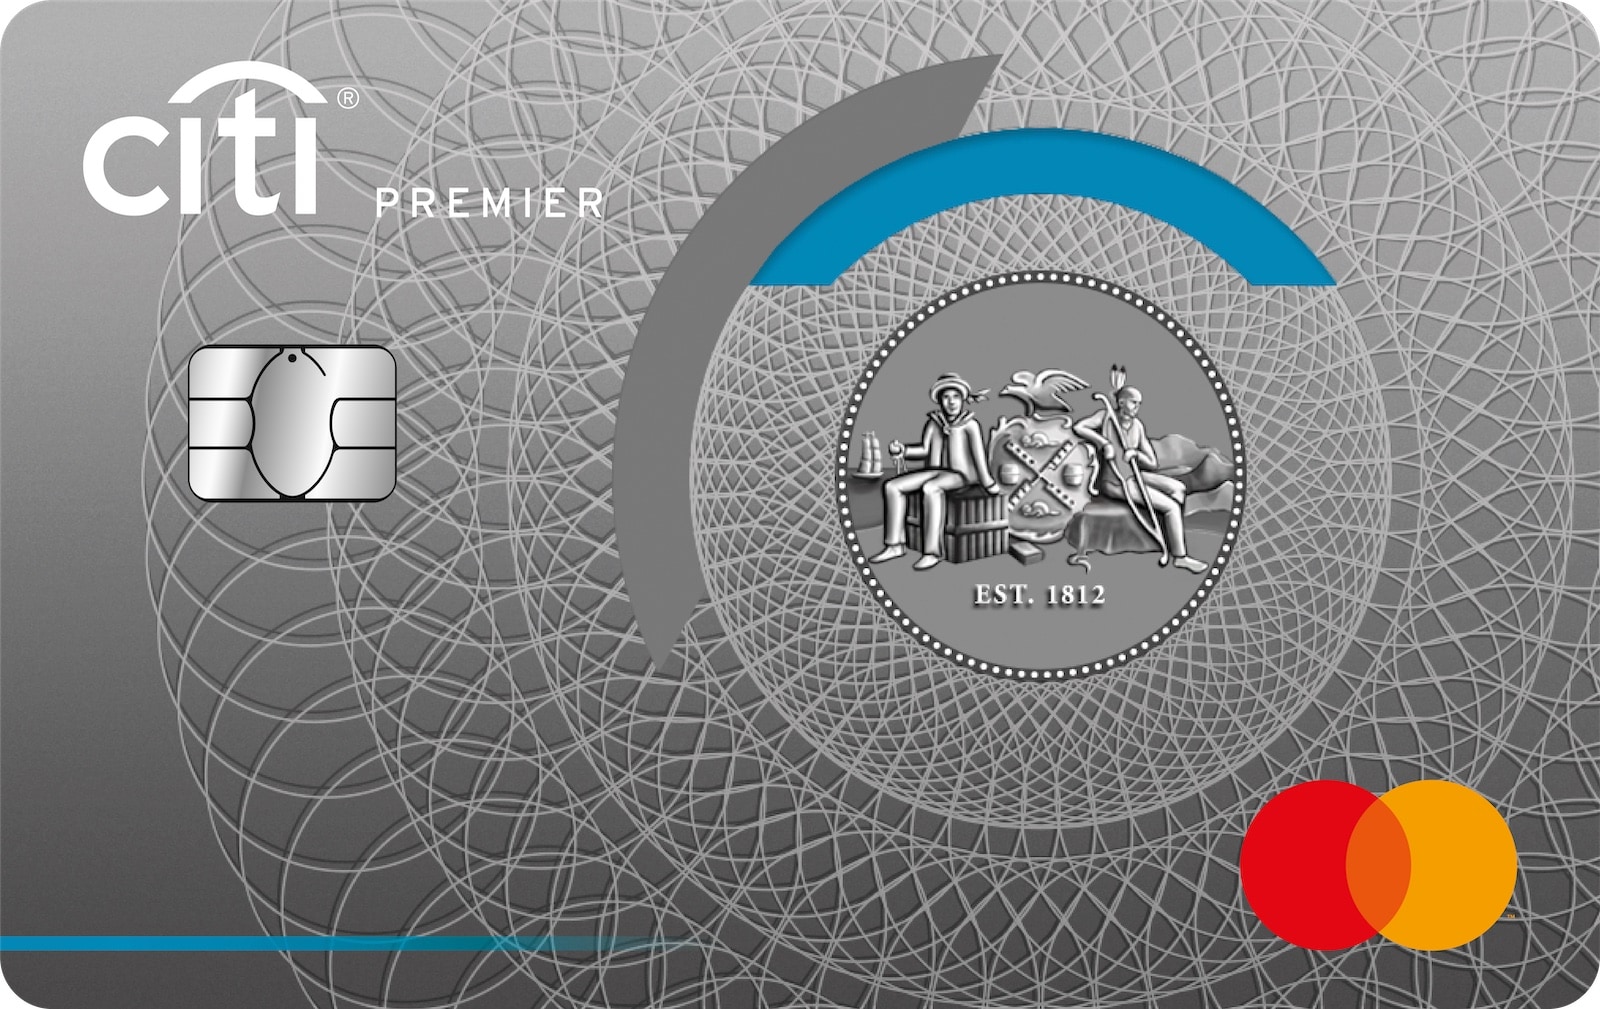 Citi Premier Card - Up to 200K Citi reward points